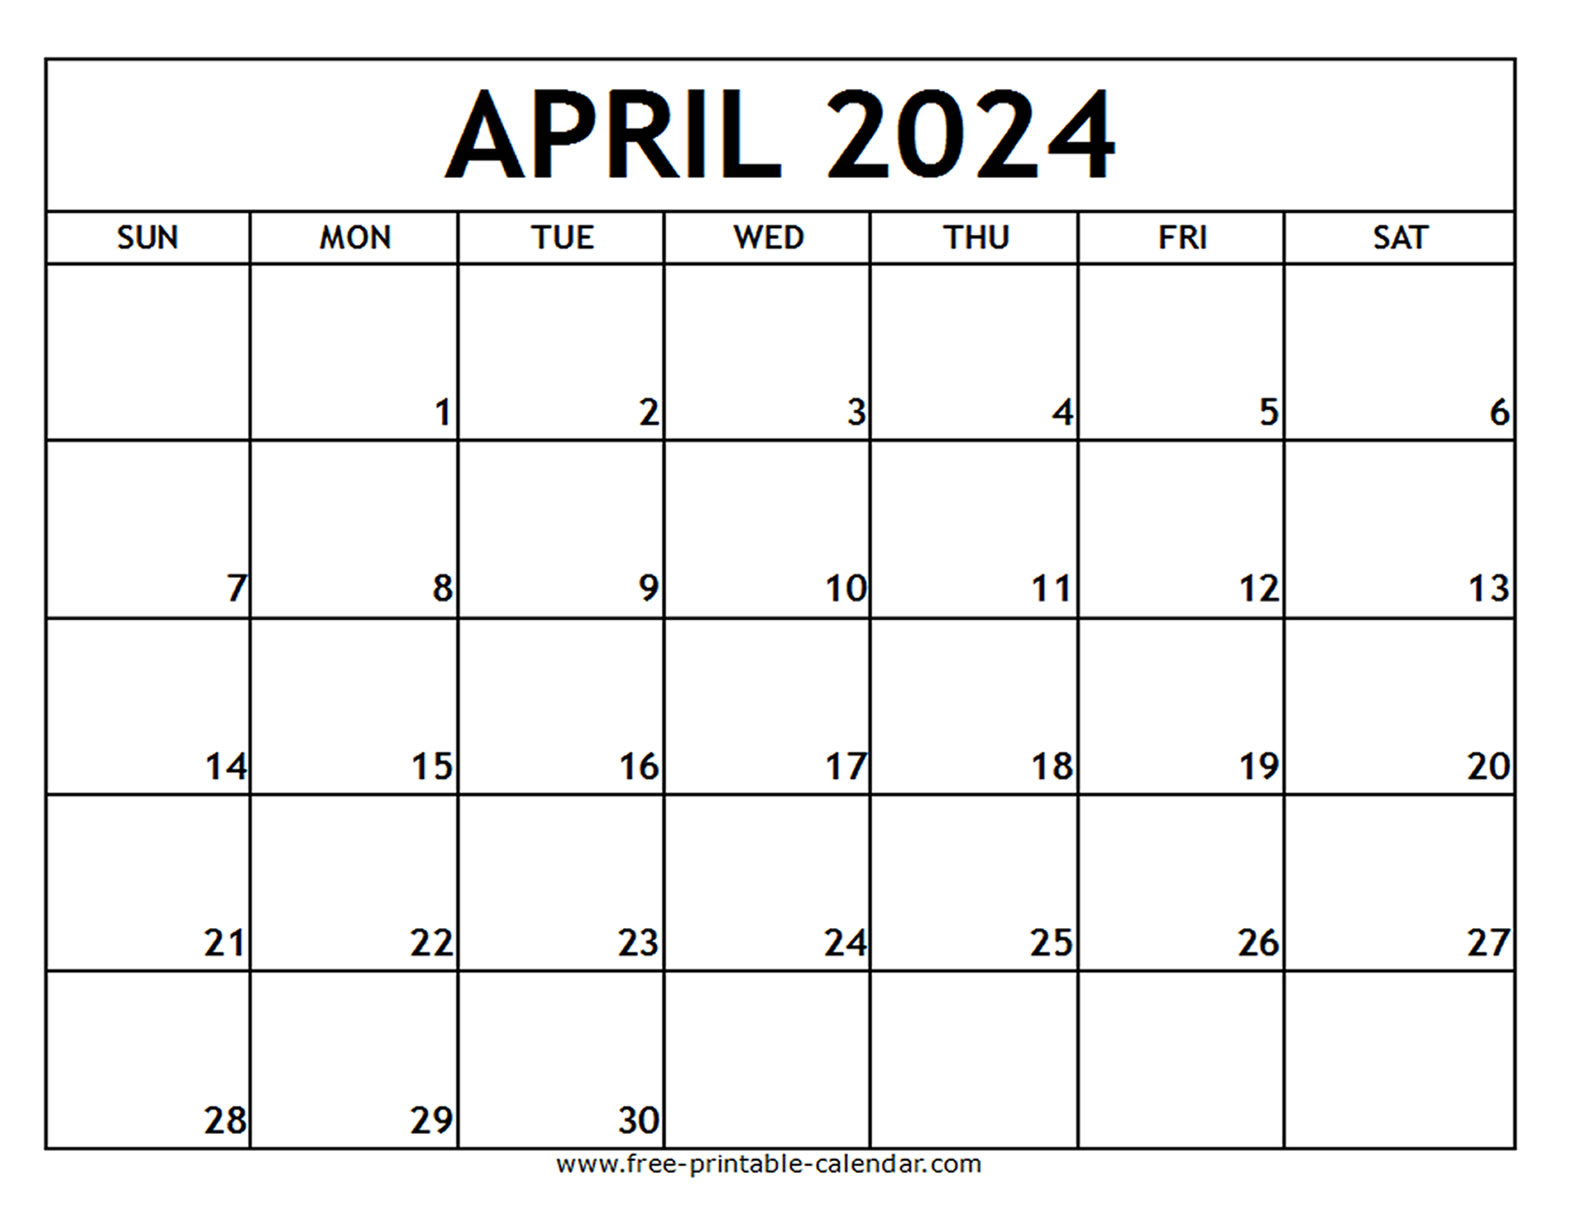 April 2024 Printable Calendar - Free-Printable-Calendar intended for Free April 2024 Calendar